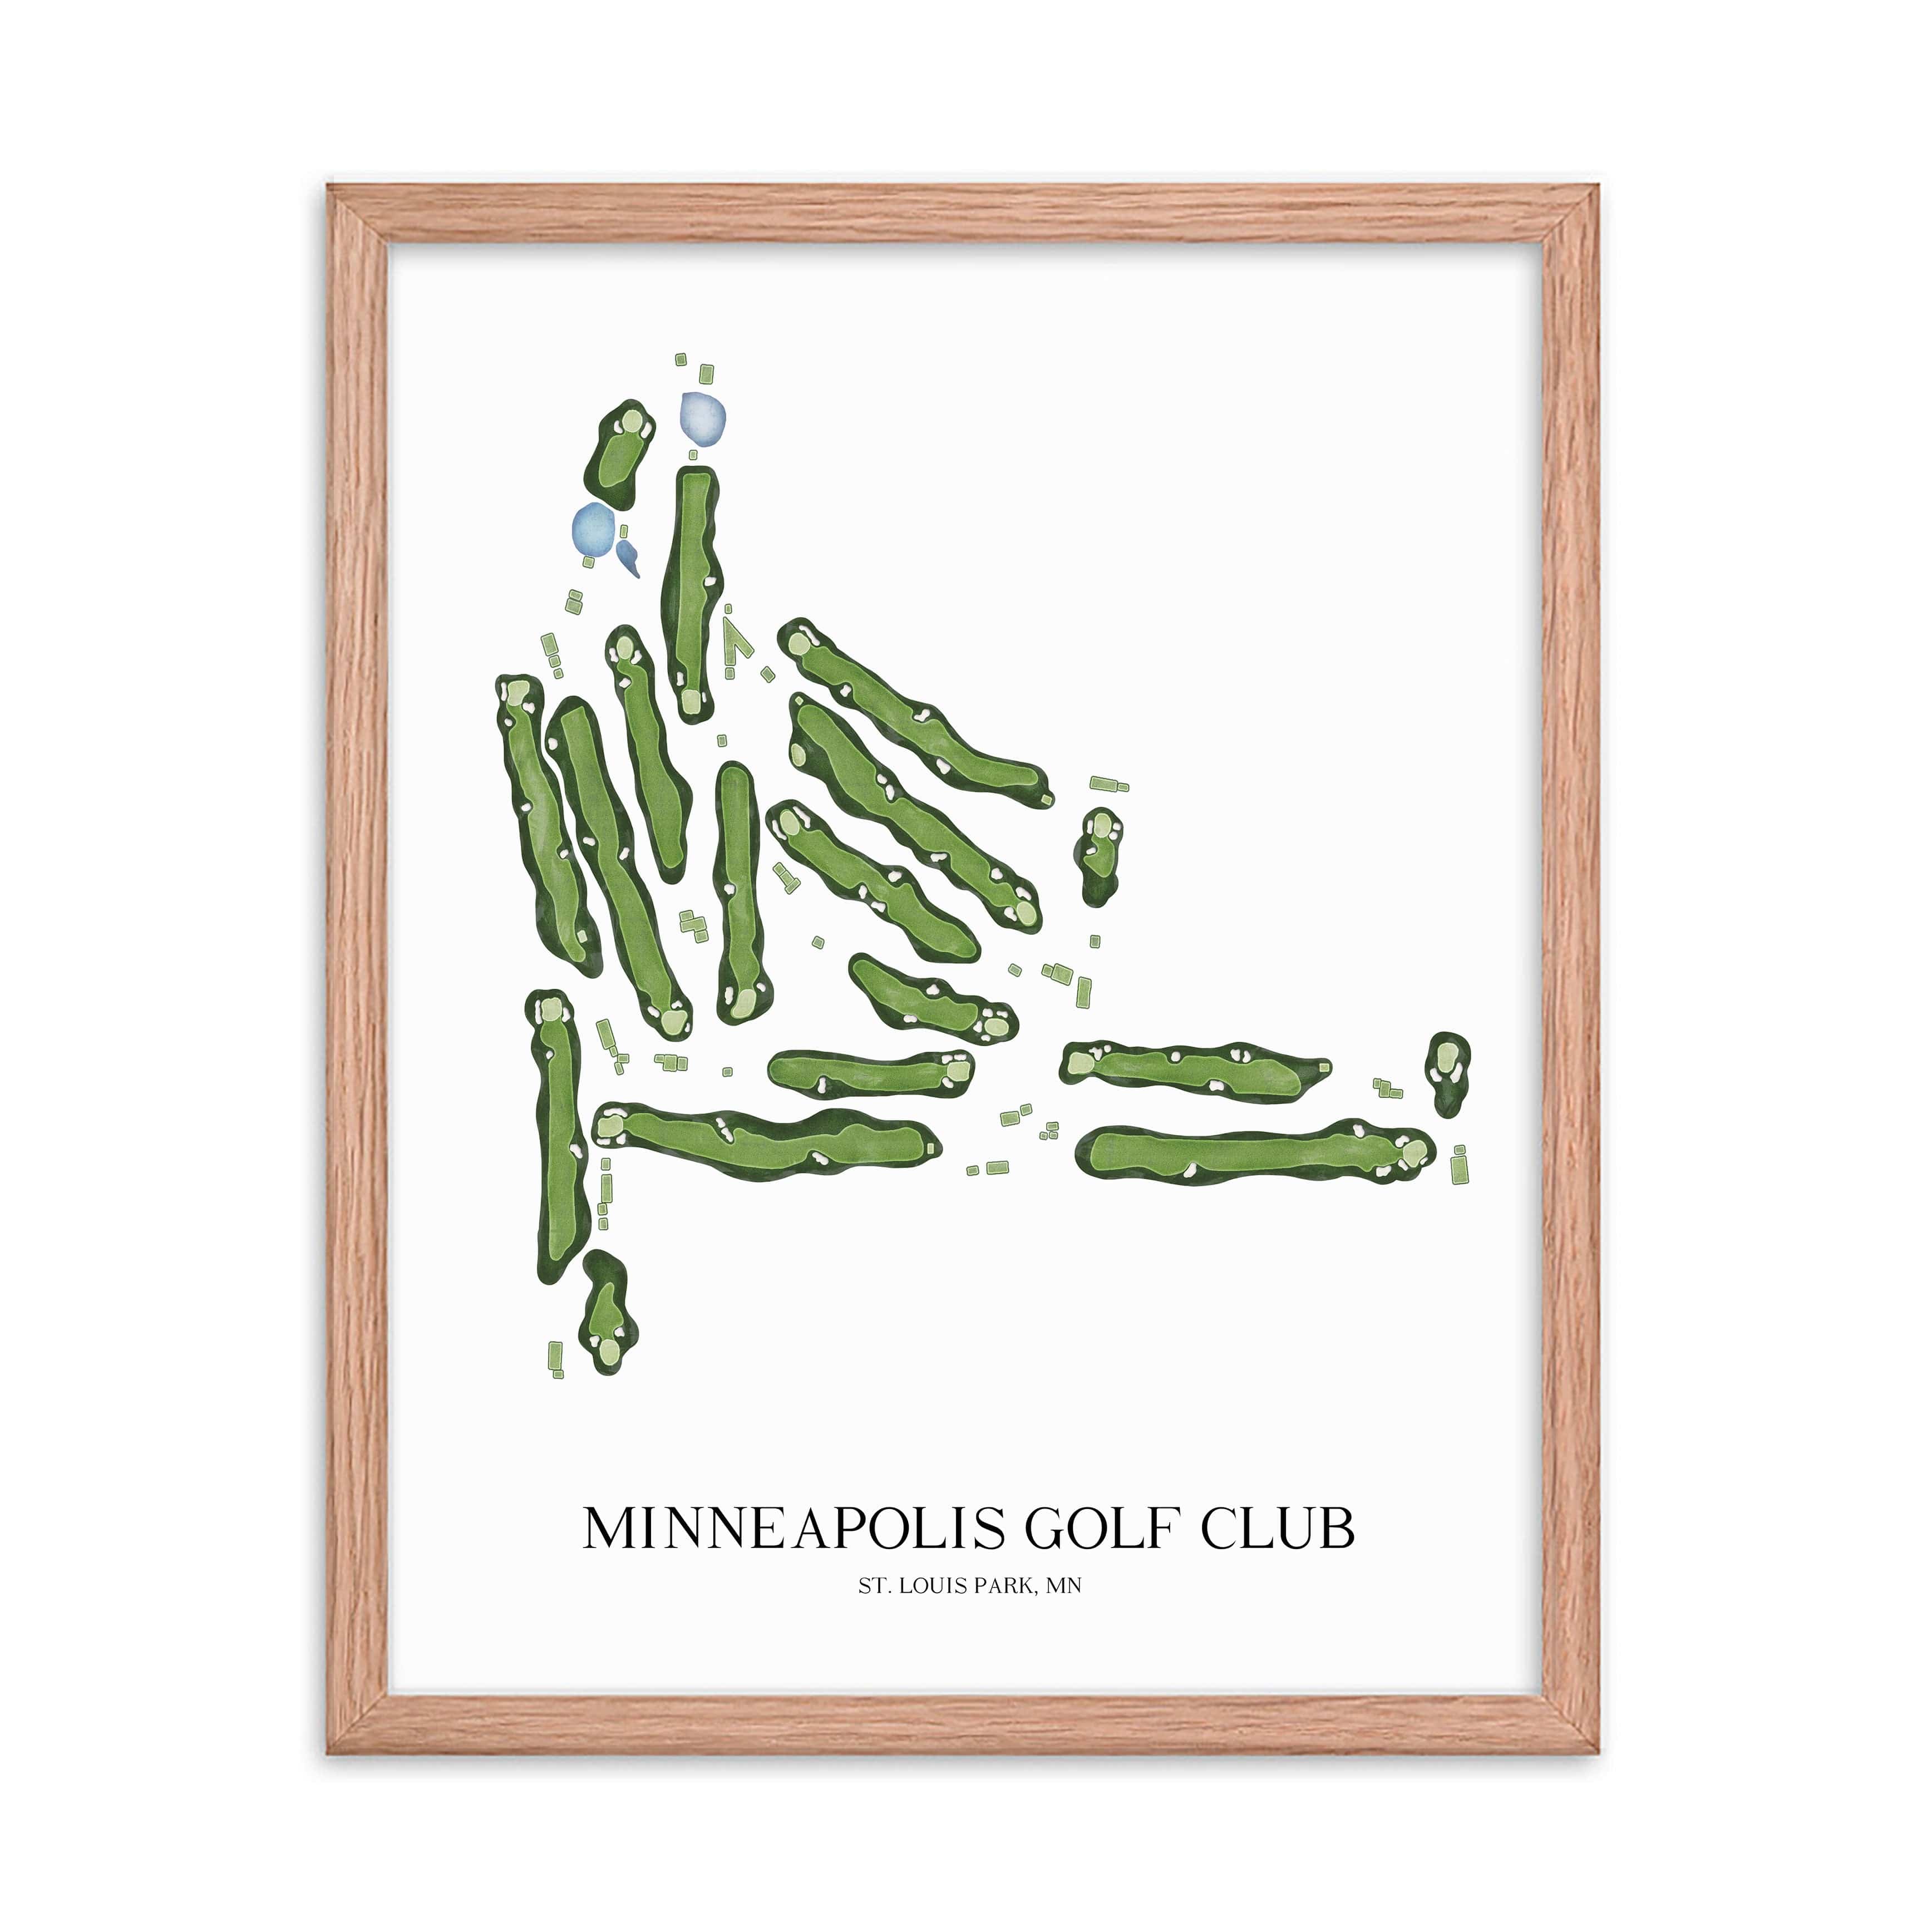 The 19th Hole Golf Shop - Golf Course Prints -  Minneapolis Golf Club Golf Course Map